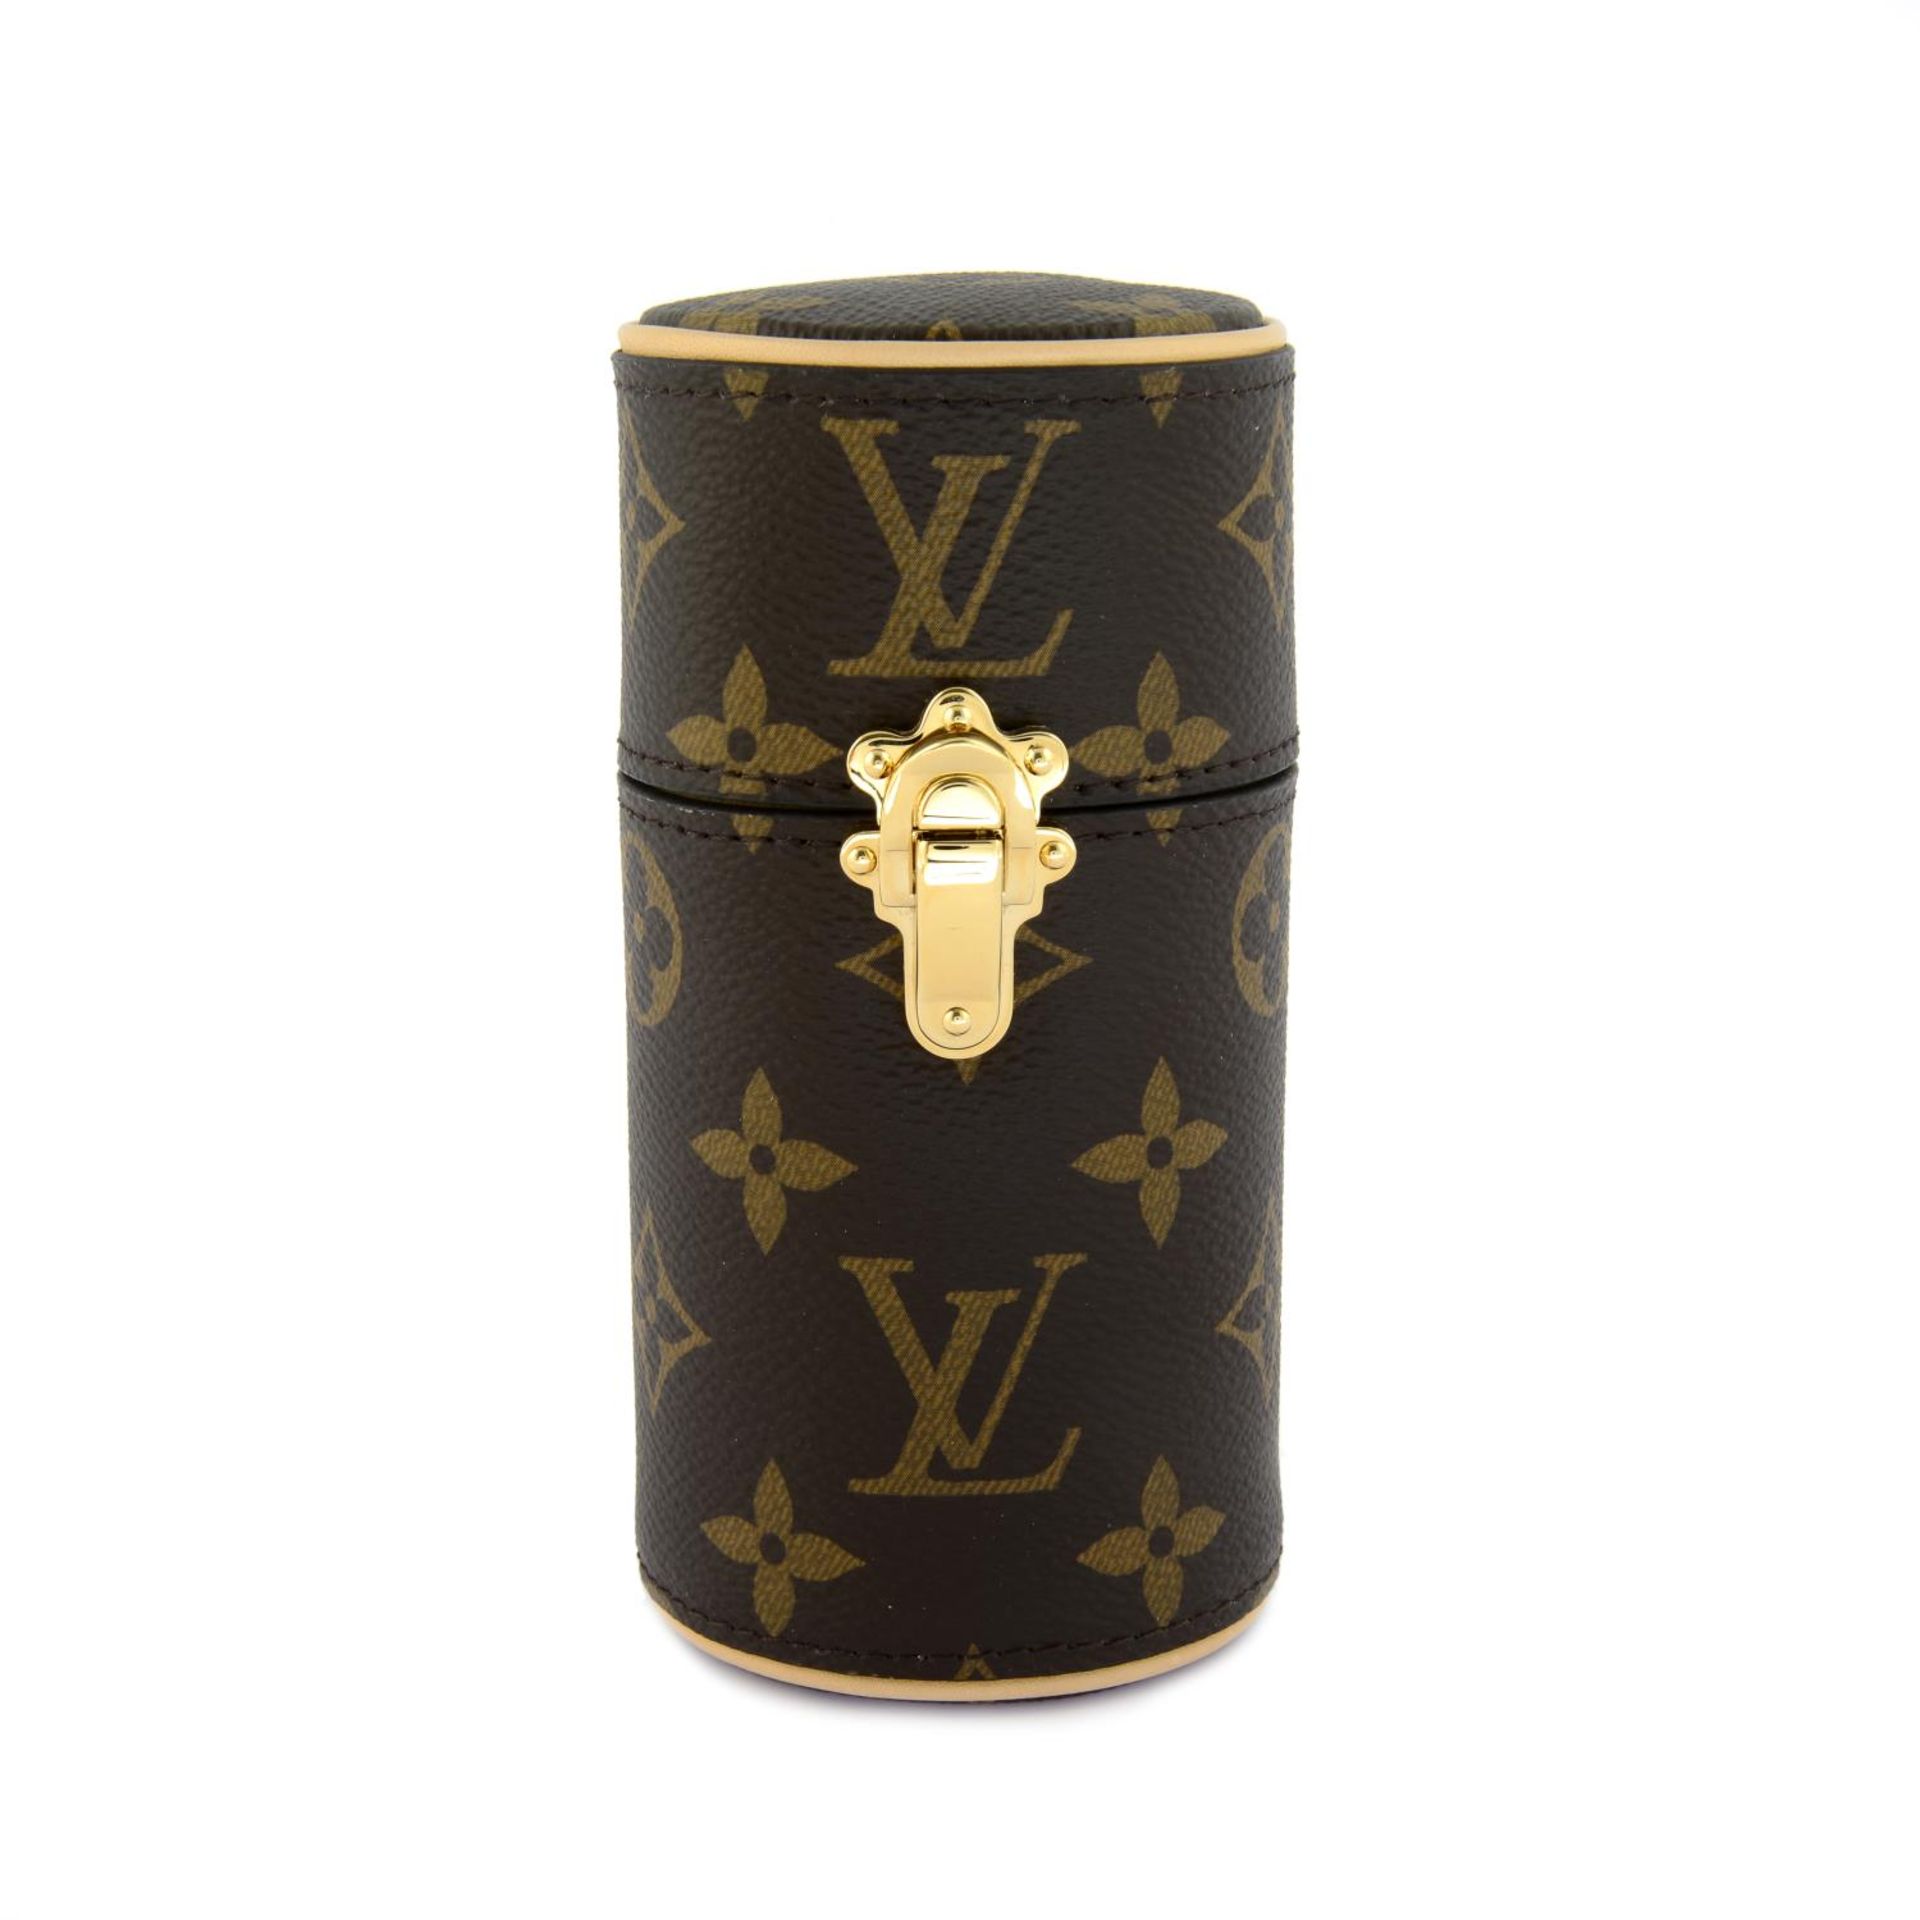 LOUIS VUITTON - a Monogram perfume travel case.